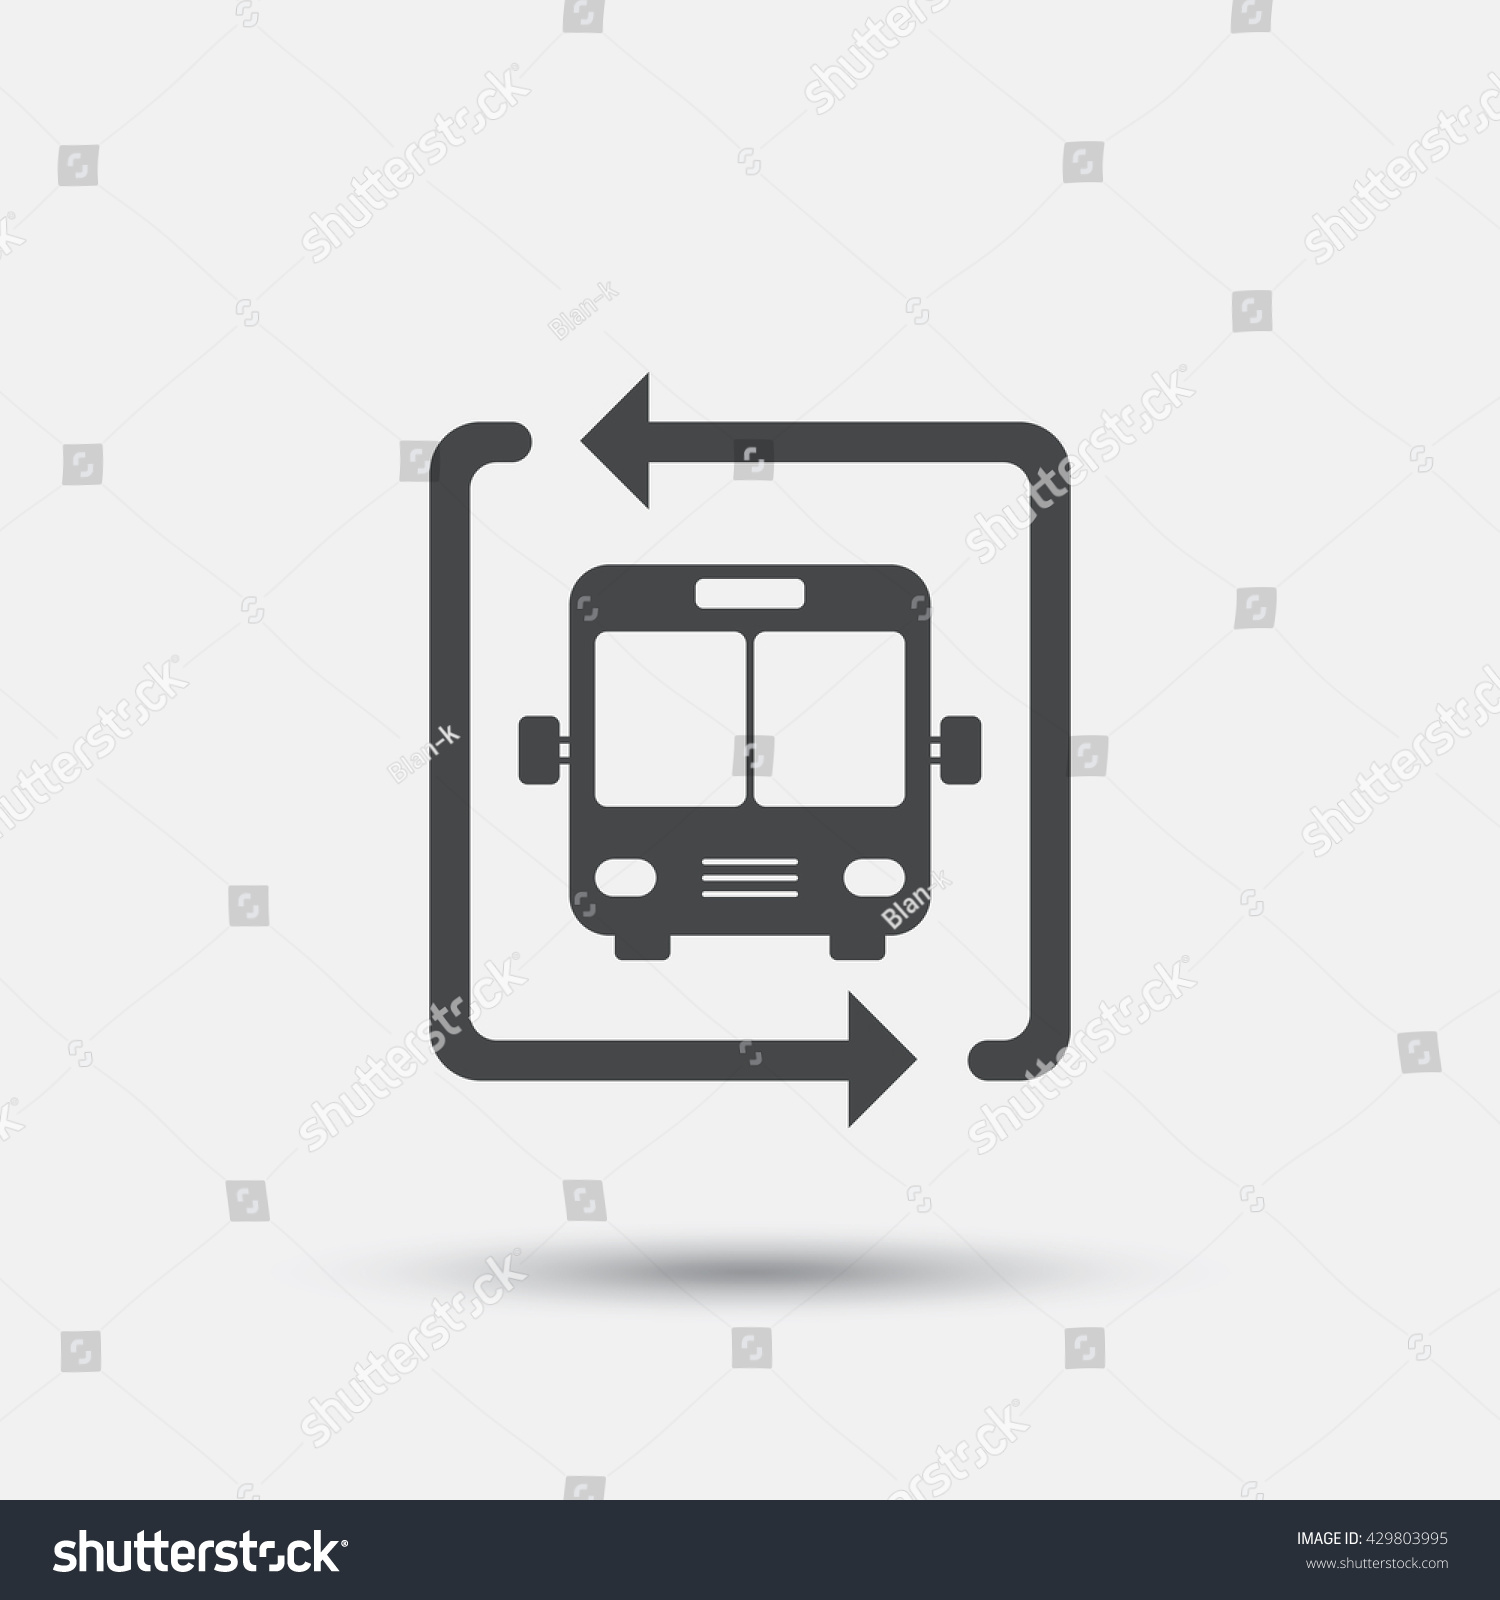 Bus shuttle icon Public transport stop symbol Vector Image